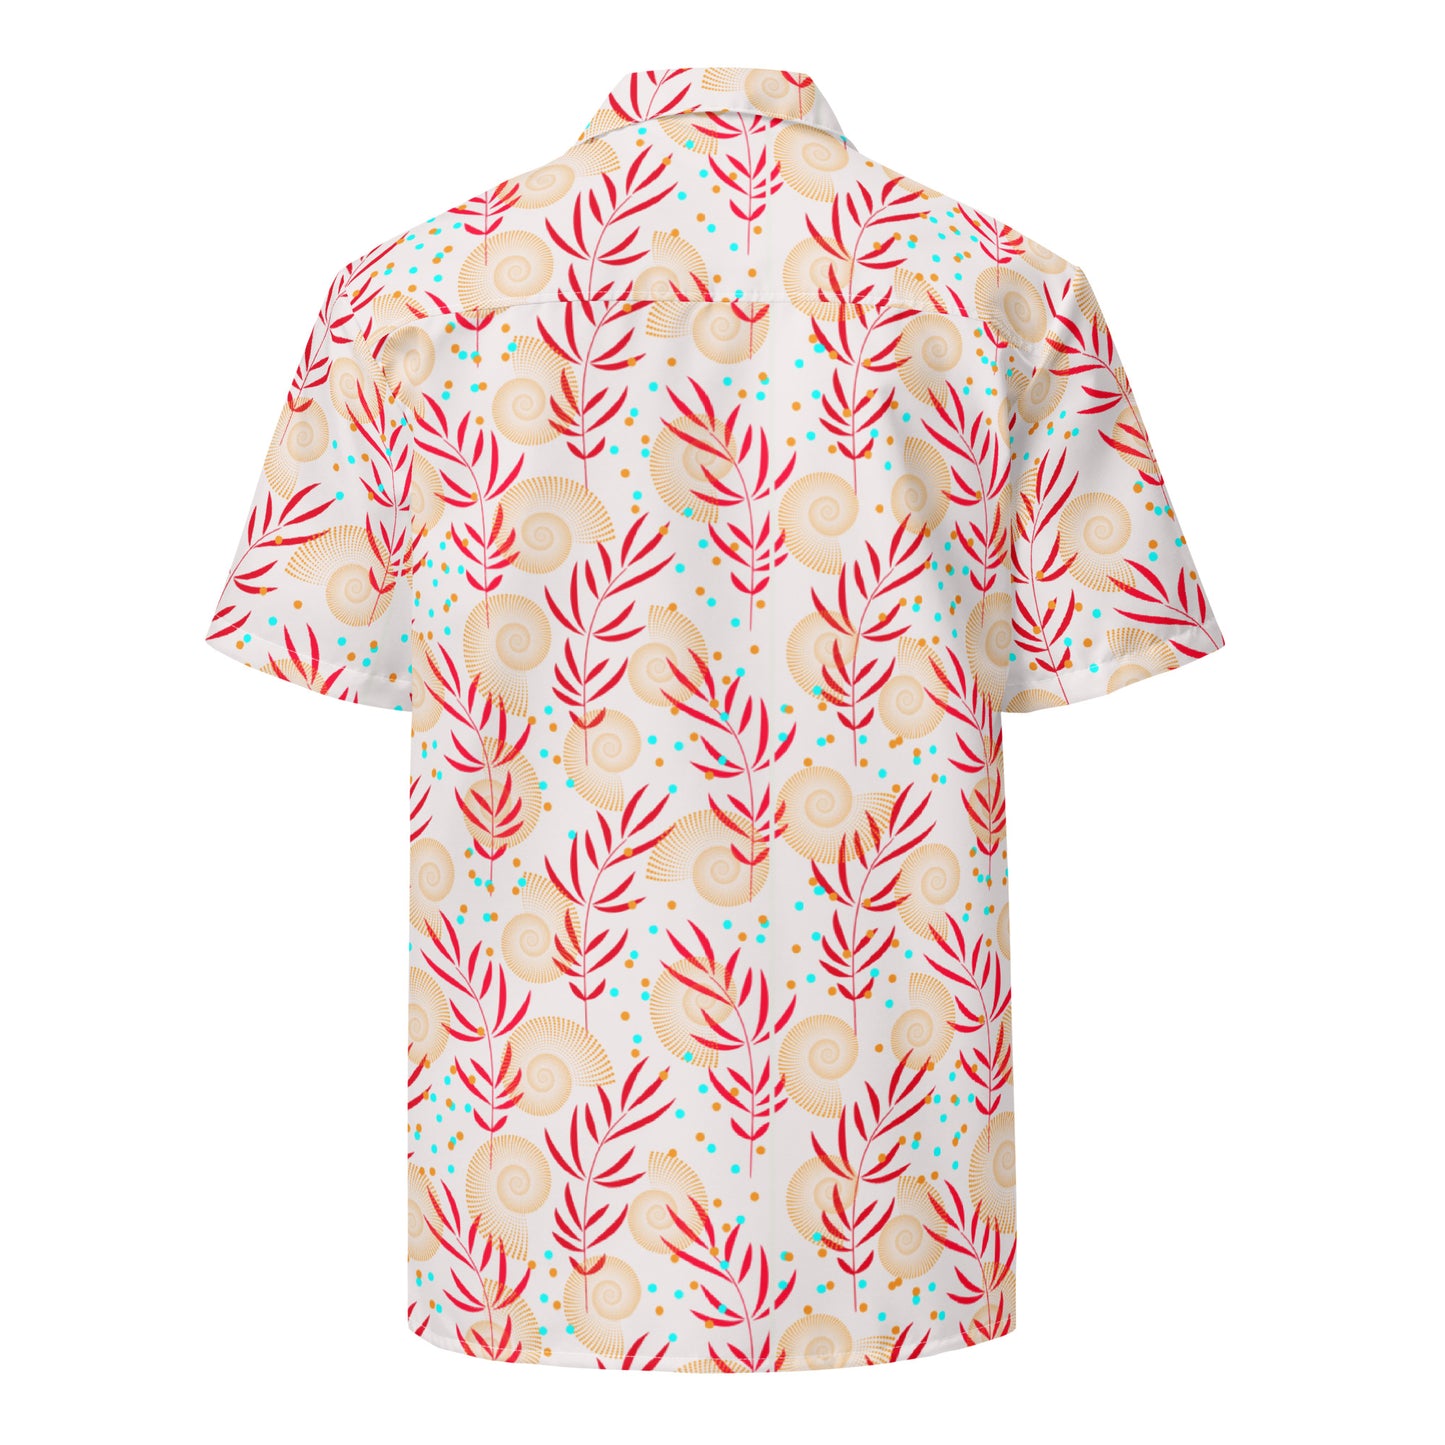 Obana Men's Hawaiian Shirt